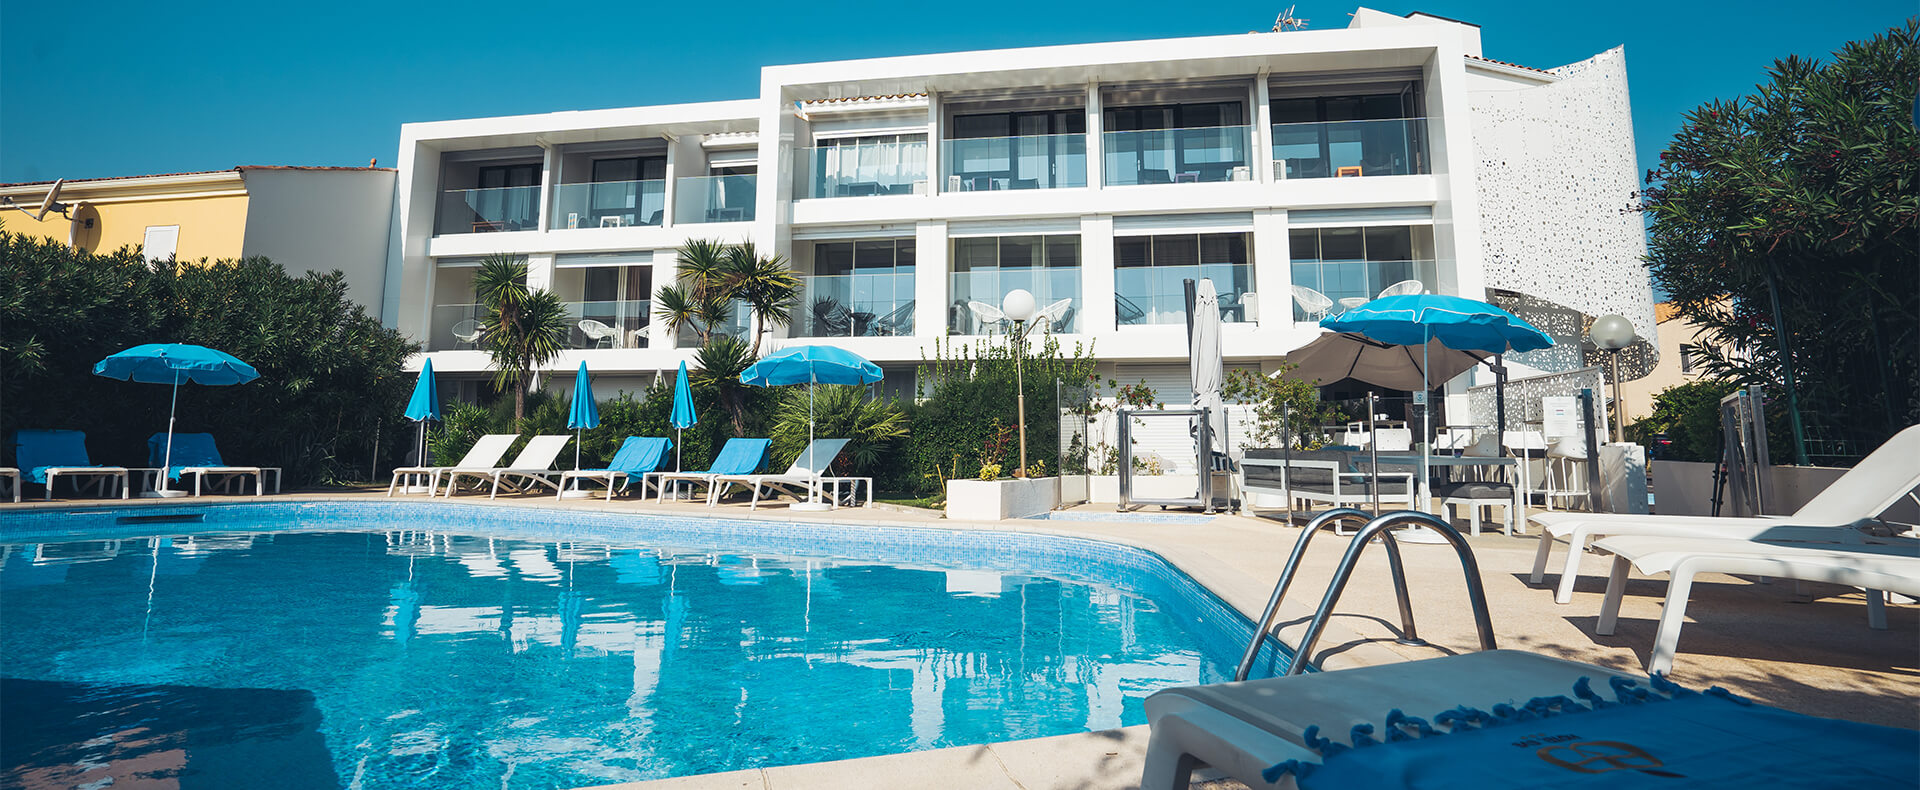 Swimming pool Hotel Eve, Naturism Hotel in Cap d'Agde